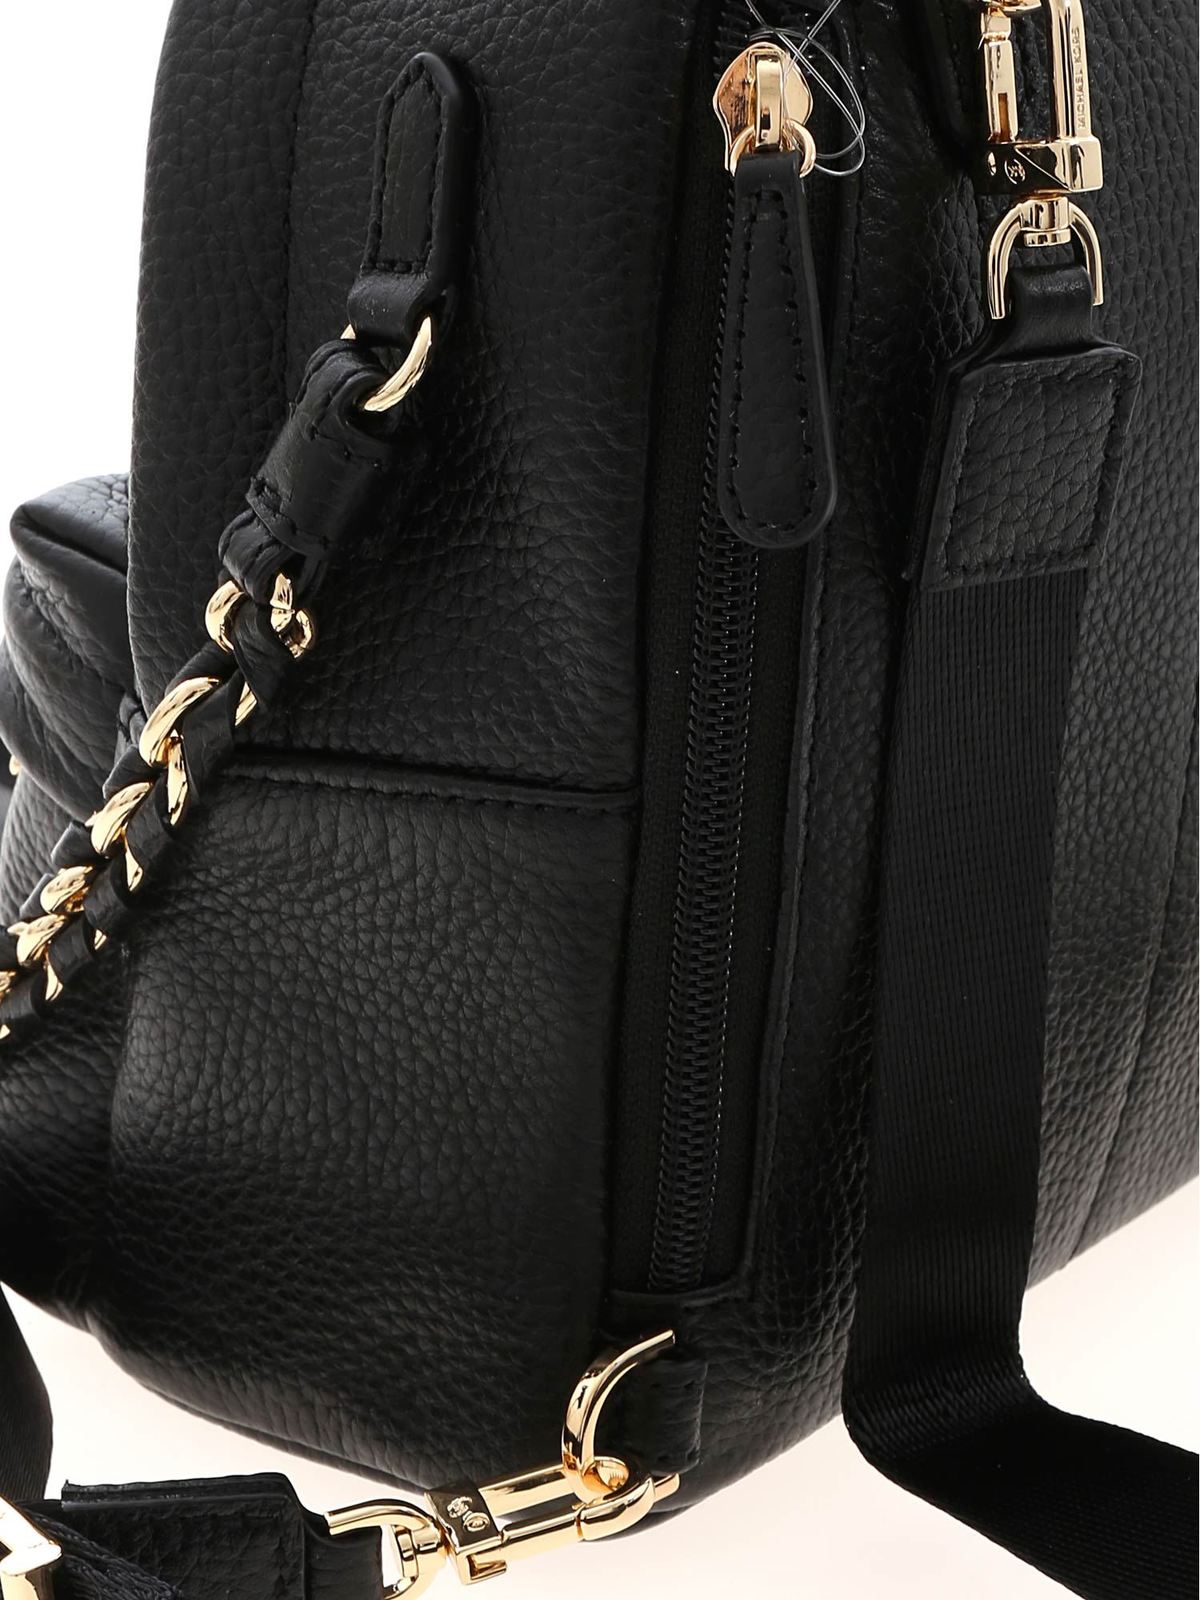 Backpacks Michael Kors - Slater black backpack with gold studs